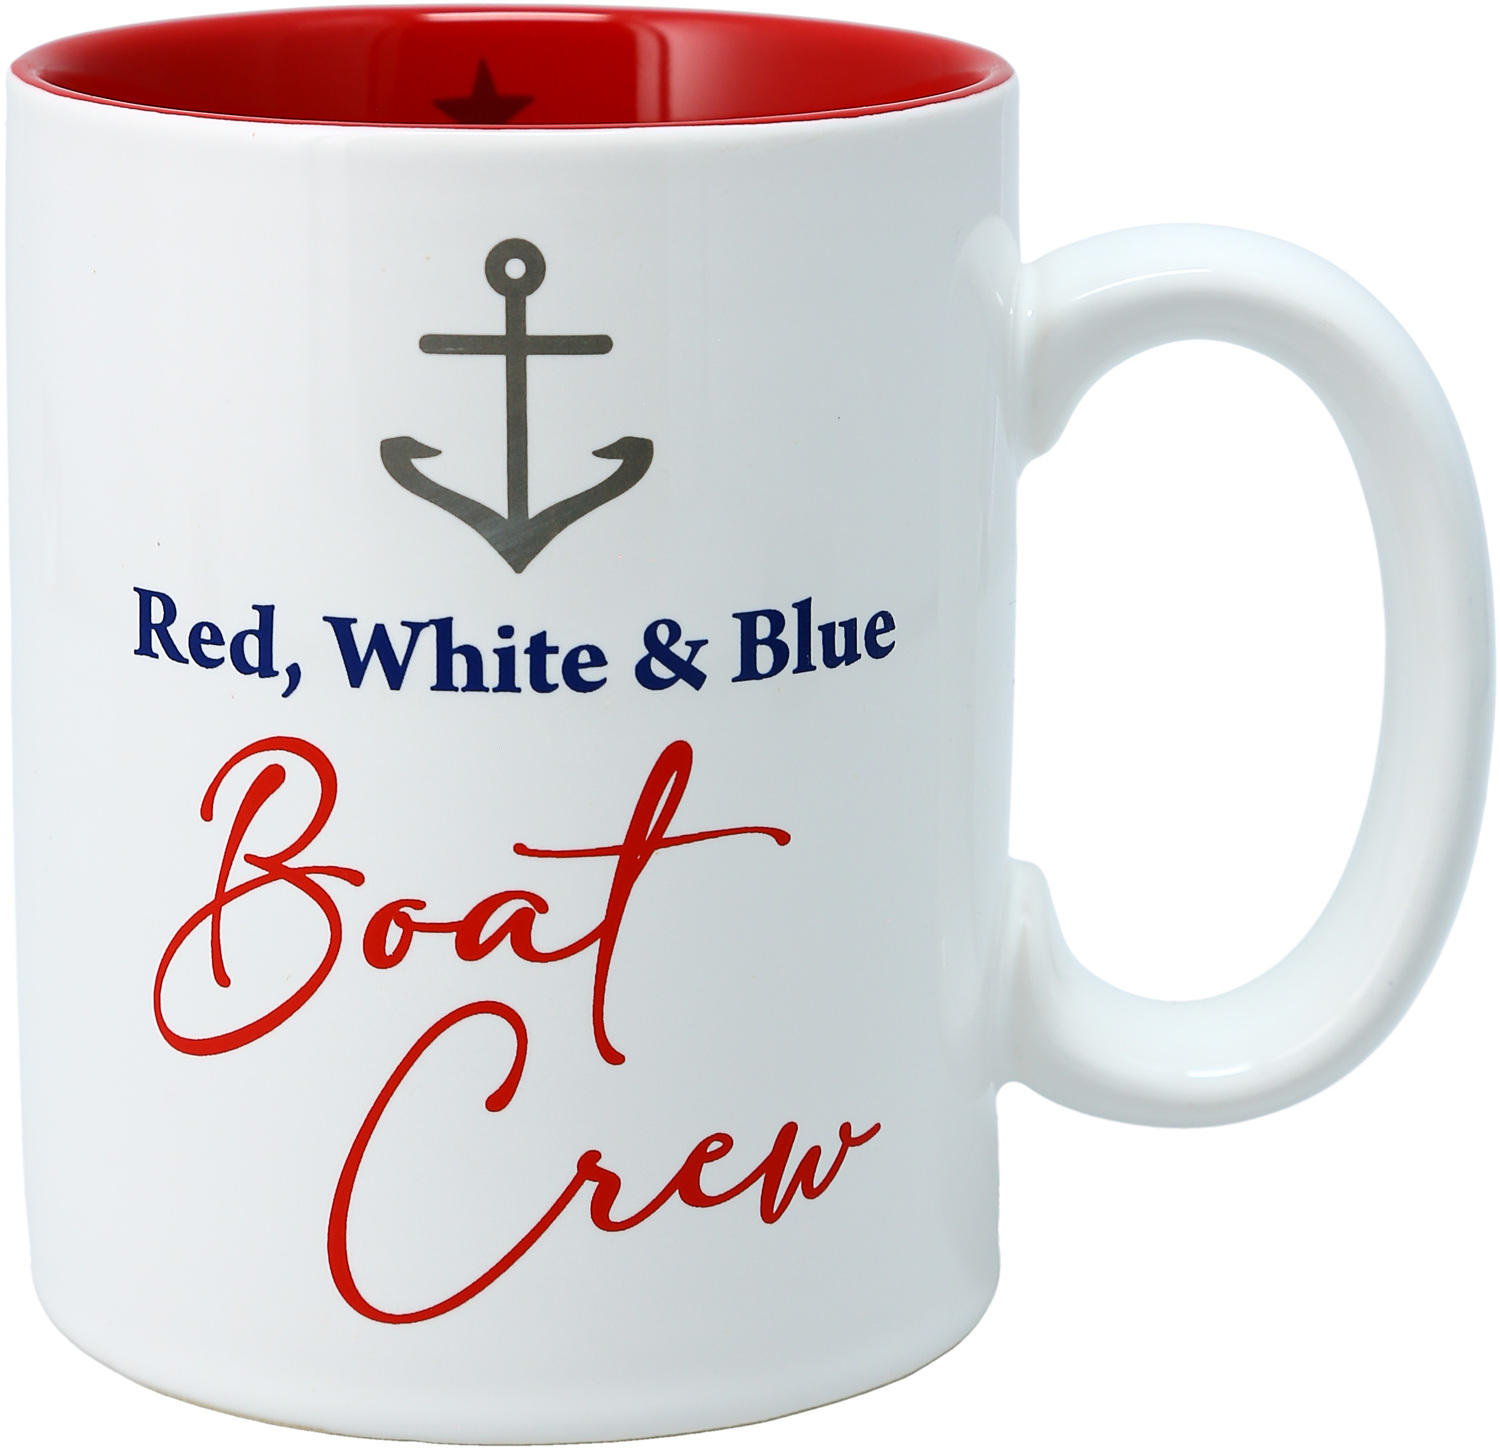 Boat Crew by Red, White, & Blue Crew - Boat Crew - 18 oz Mug